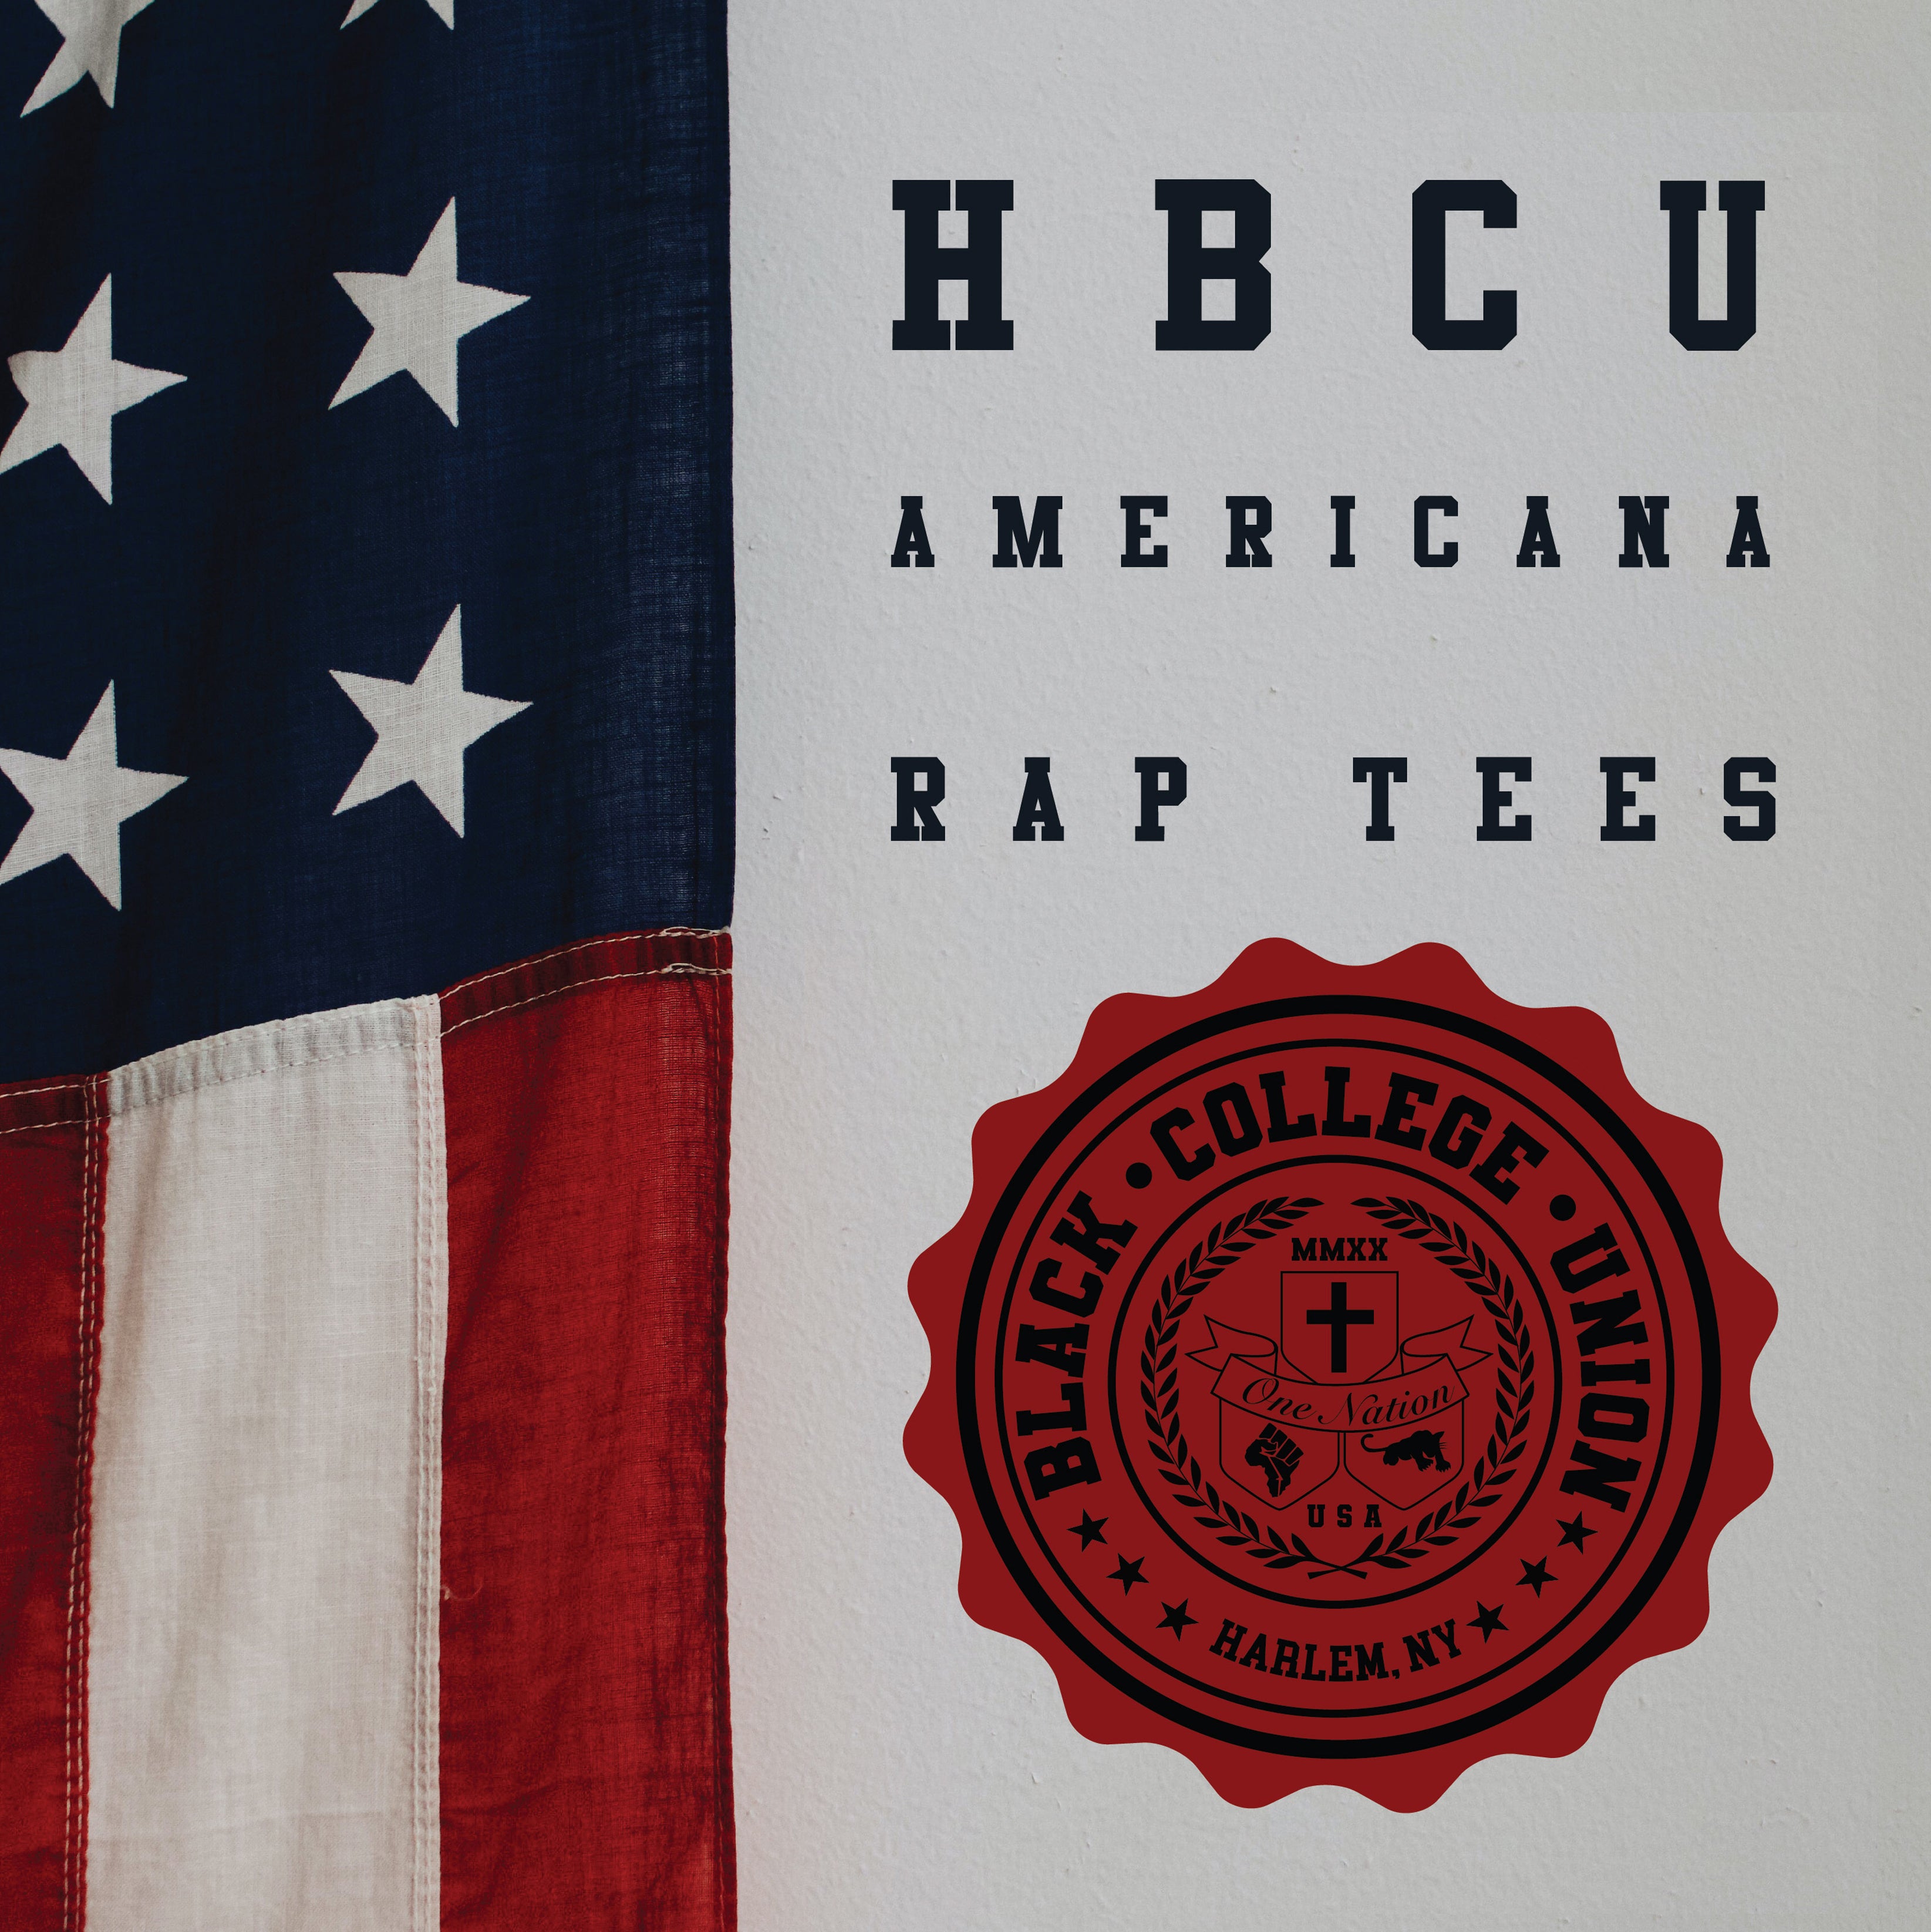 BCU X Champion Original HBCU Americana Rap Tee - Miles